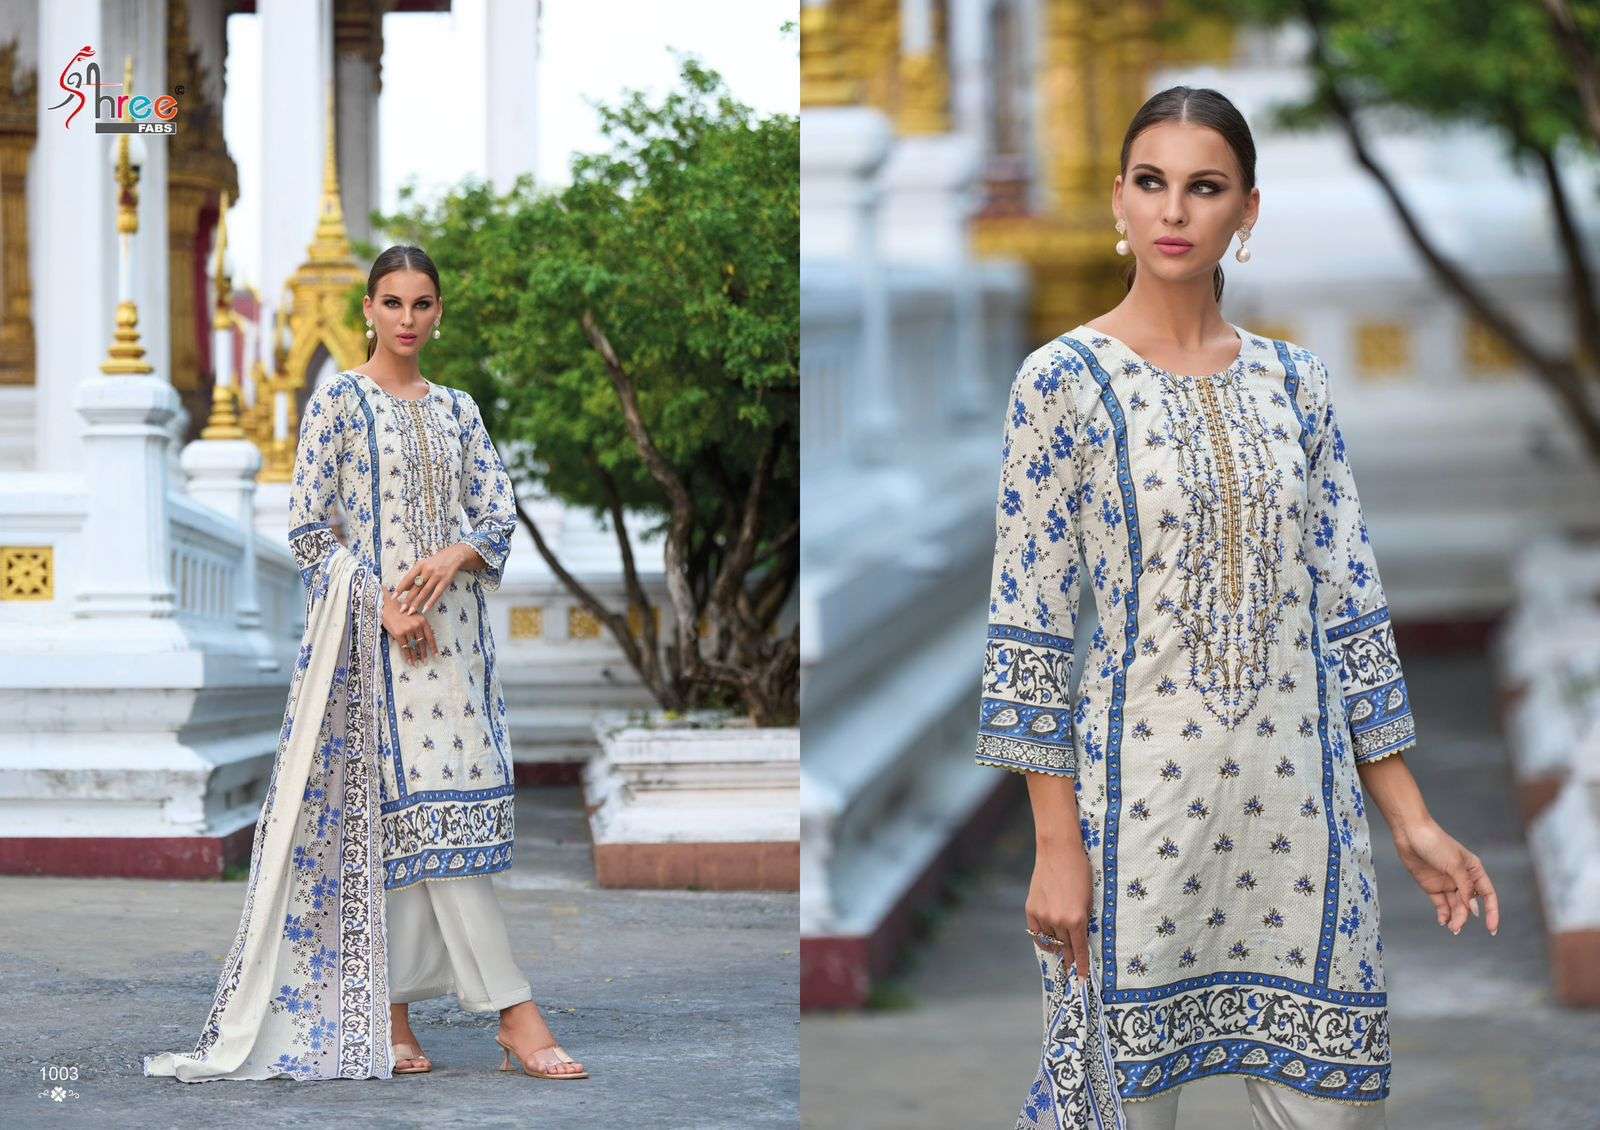 Shree Riwayat Premium Chiffon Dupatta Designer Salwar Suits Wholesale catalog